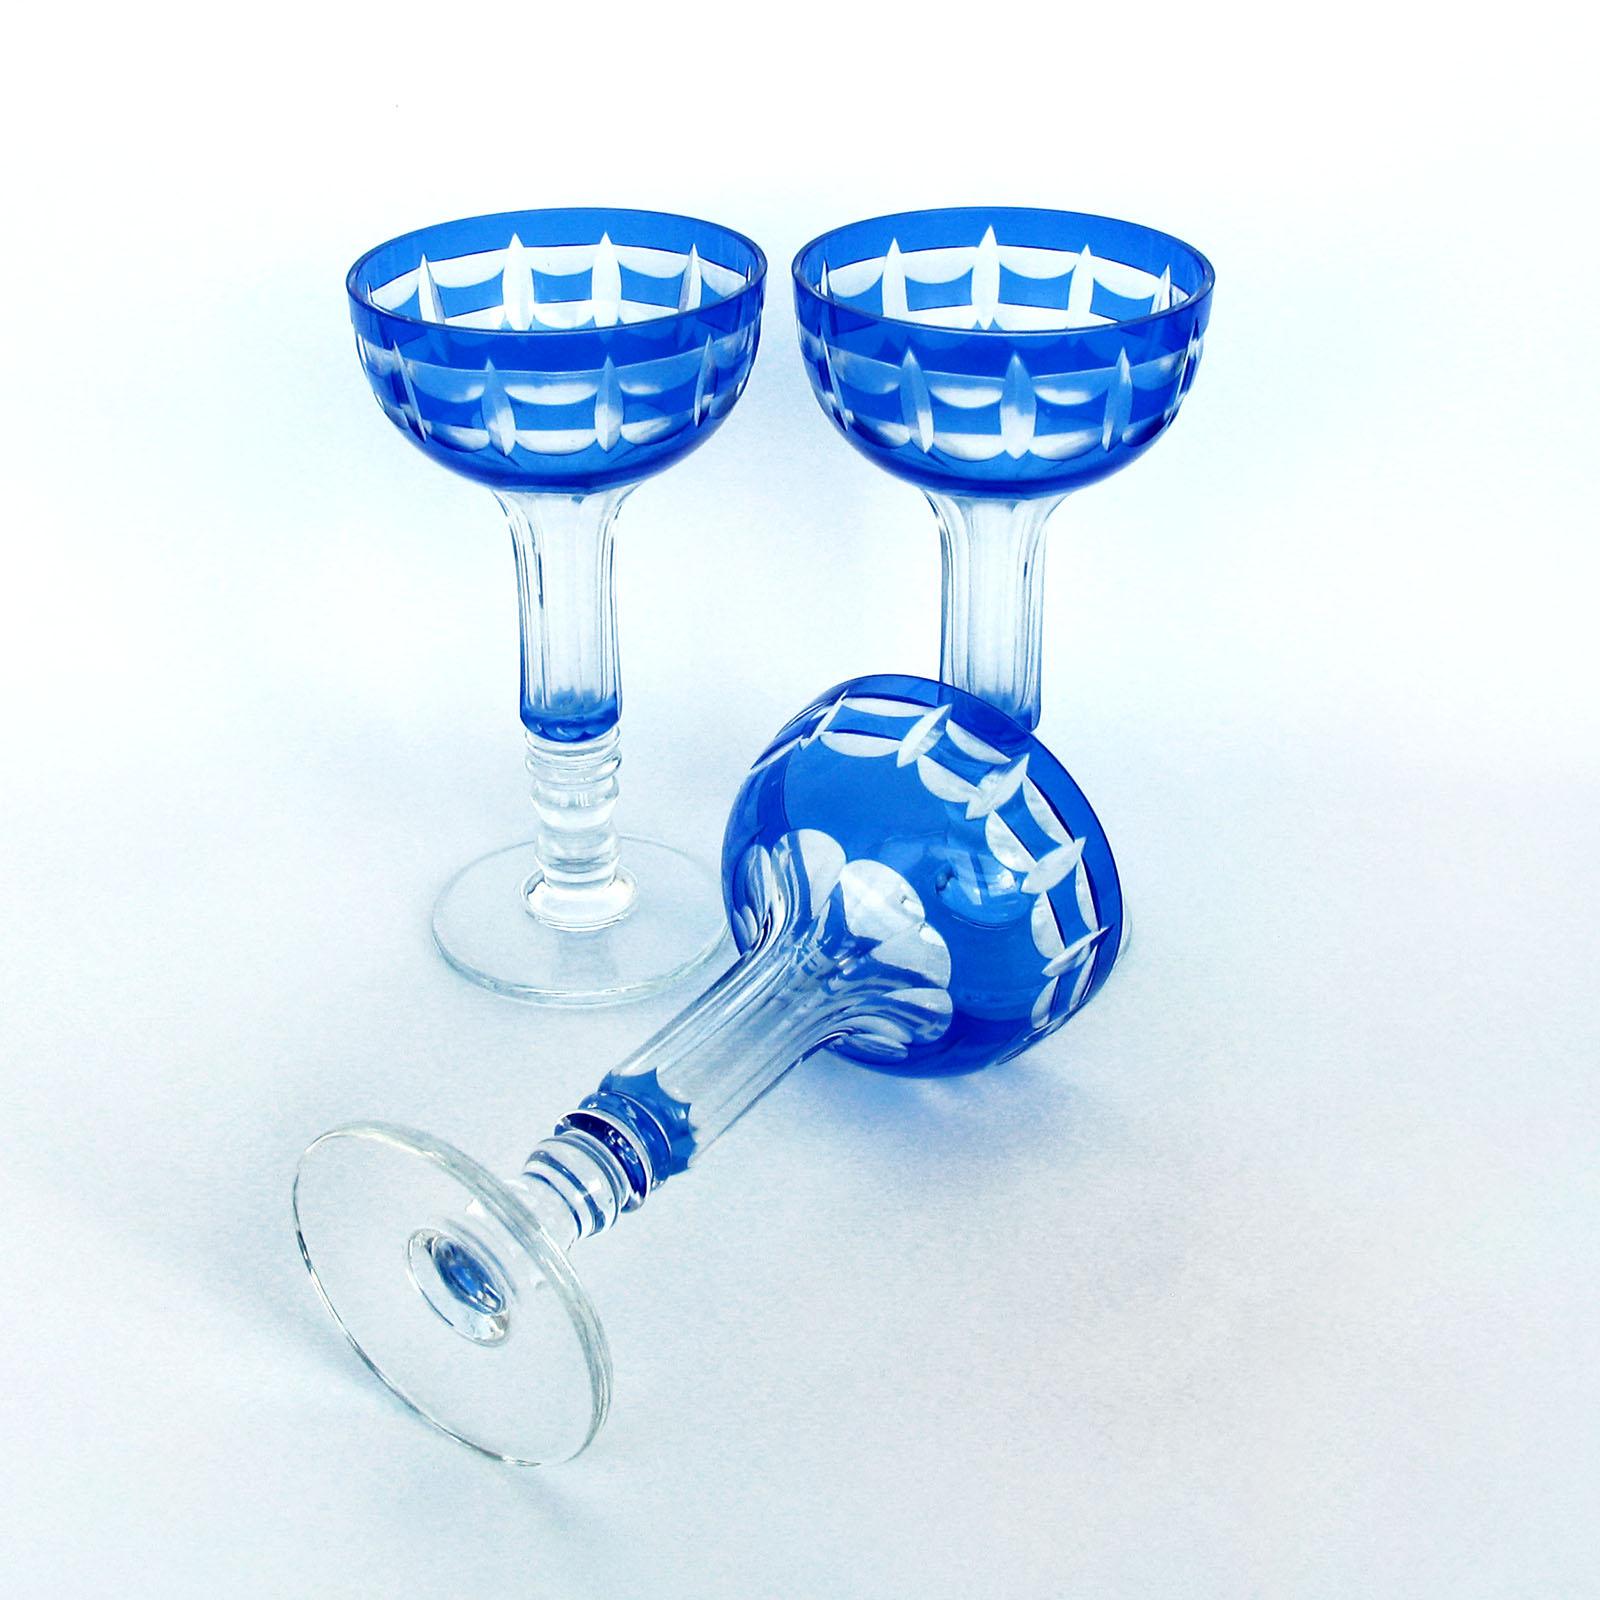 Cristal Lot de 12 gobelets en cristal Val Saint Lambert bleu cobalt superposé, taillés en clair en vente